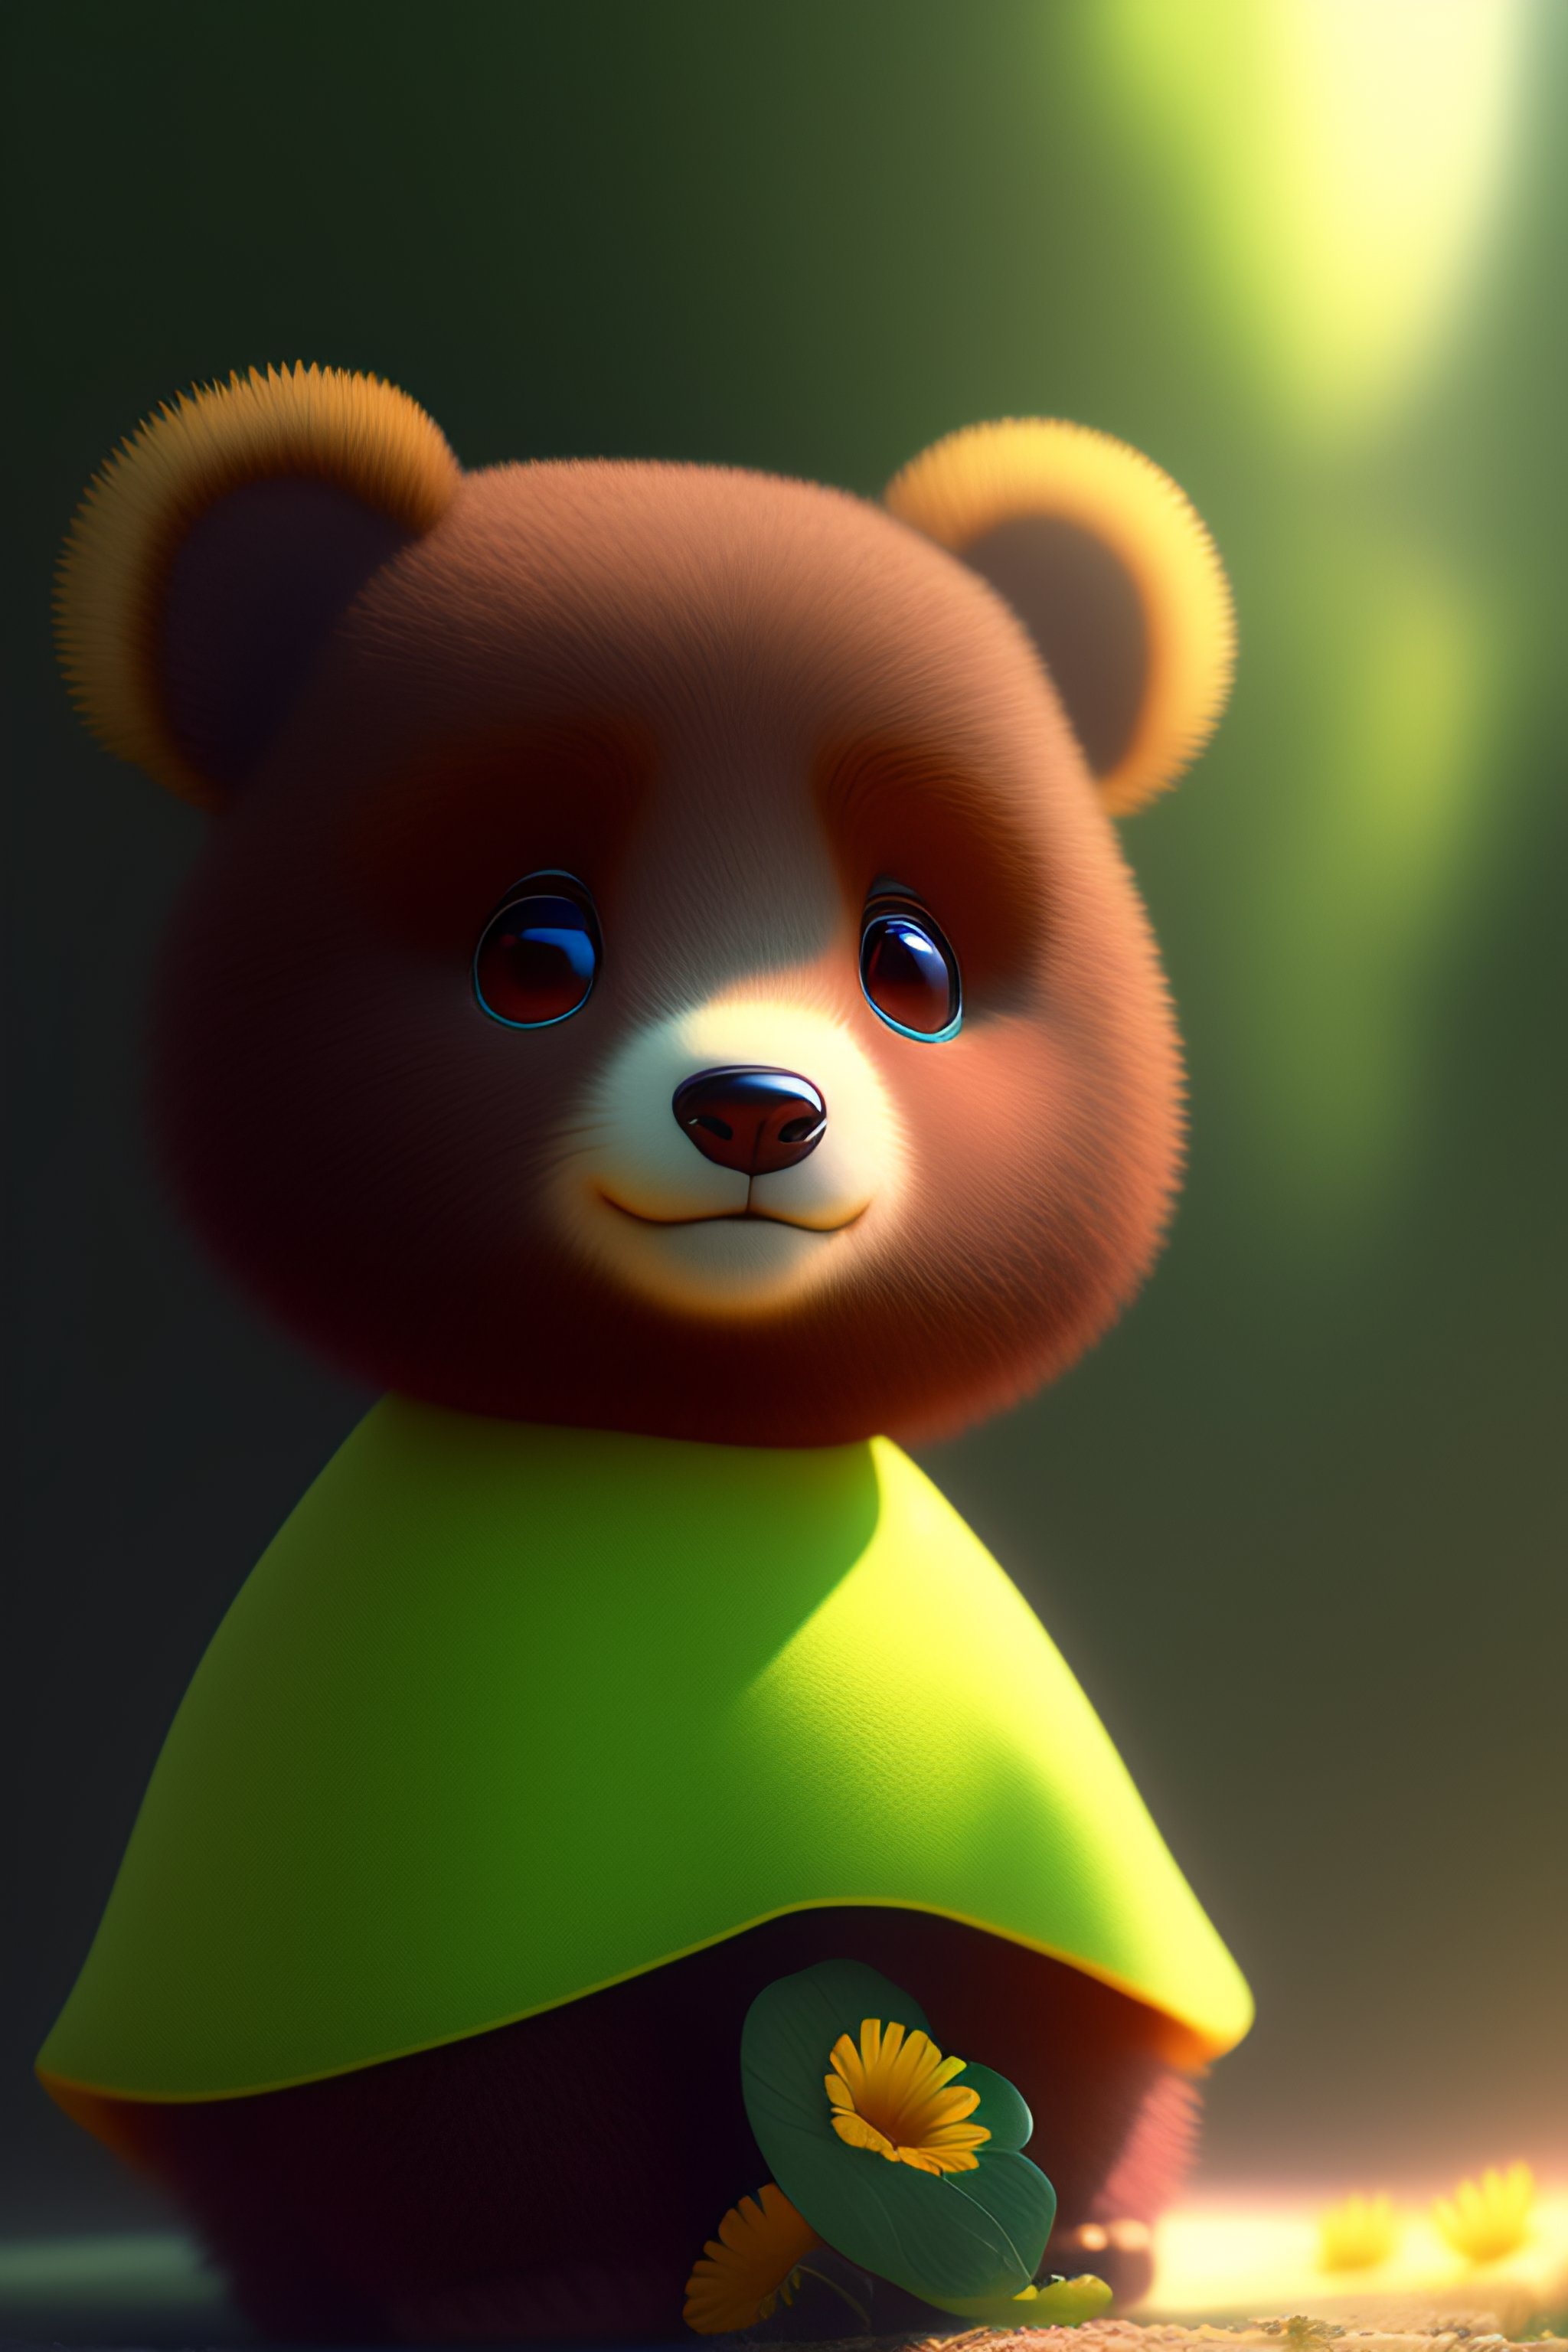 Lexica - Cute teddu bear, disney, pixar, smile, big eyes, holding ...